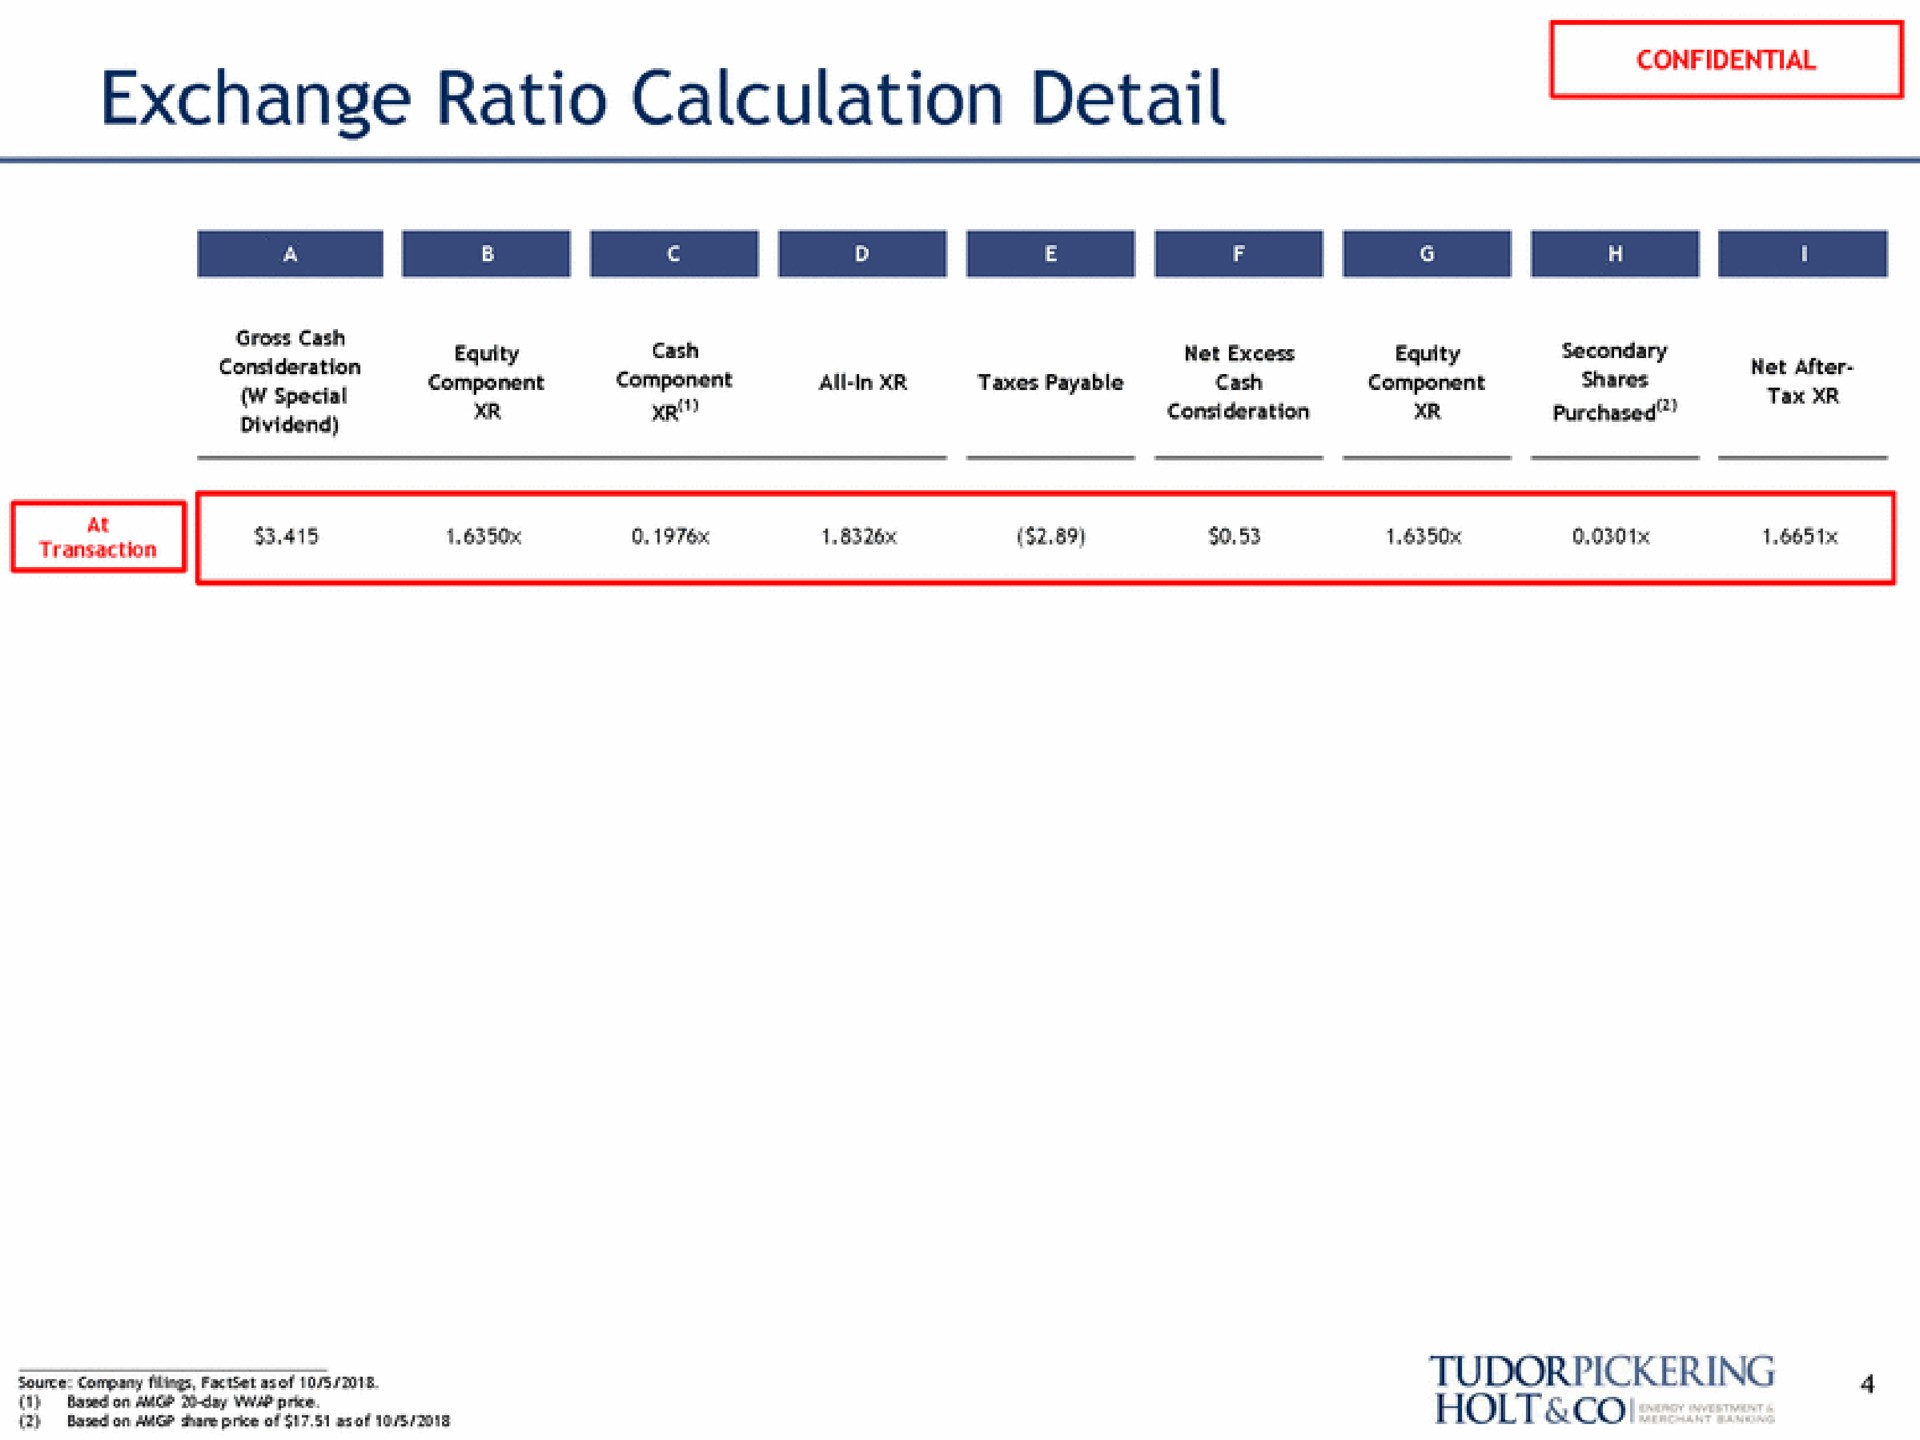 exchange ratio calculation detail | Tudor, Pickering, Holt & Co